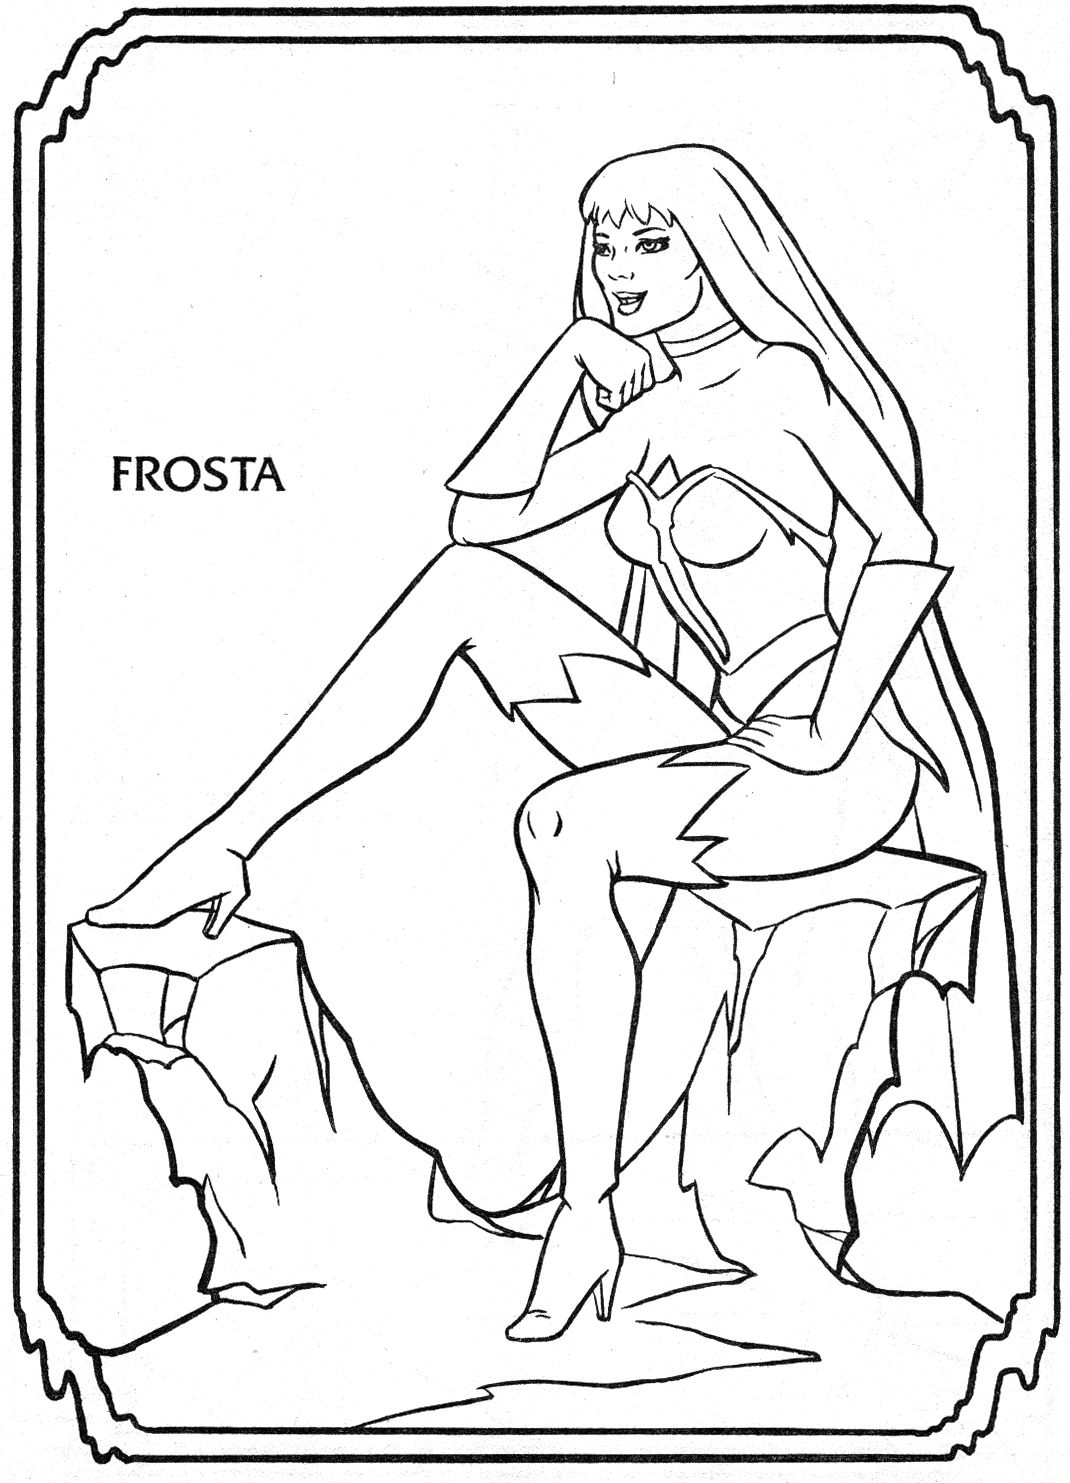 She-Ra: Princess of Power (1985) - coloring book 20